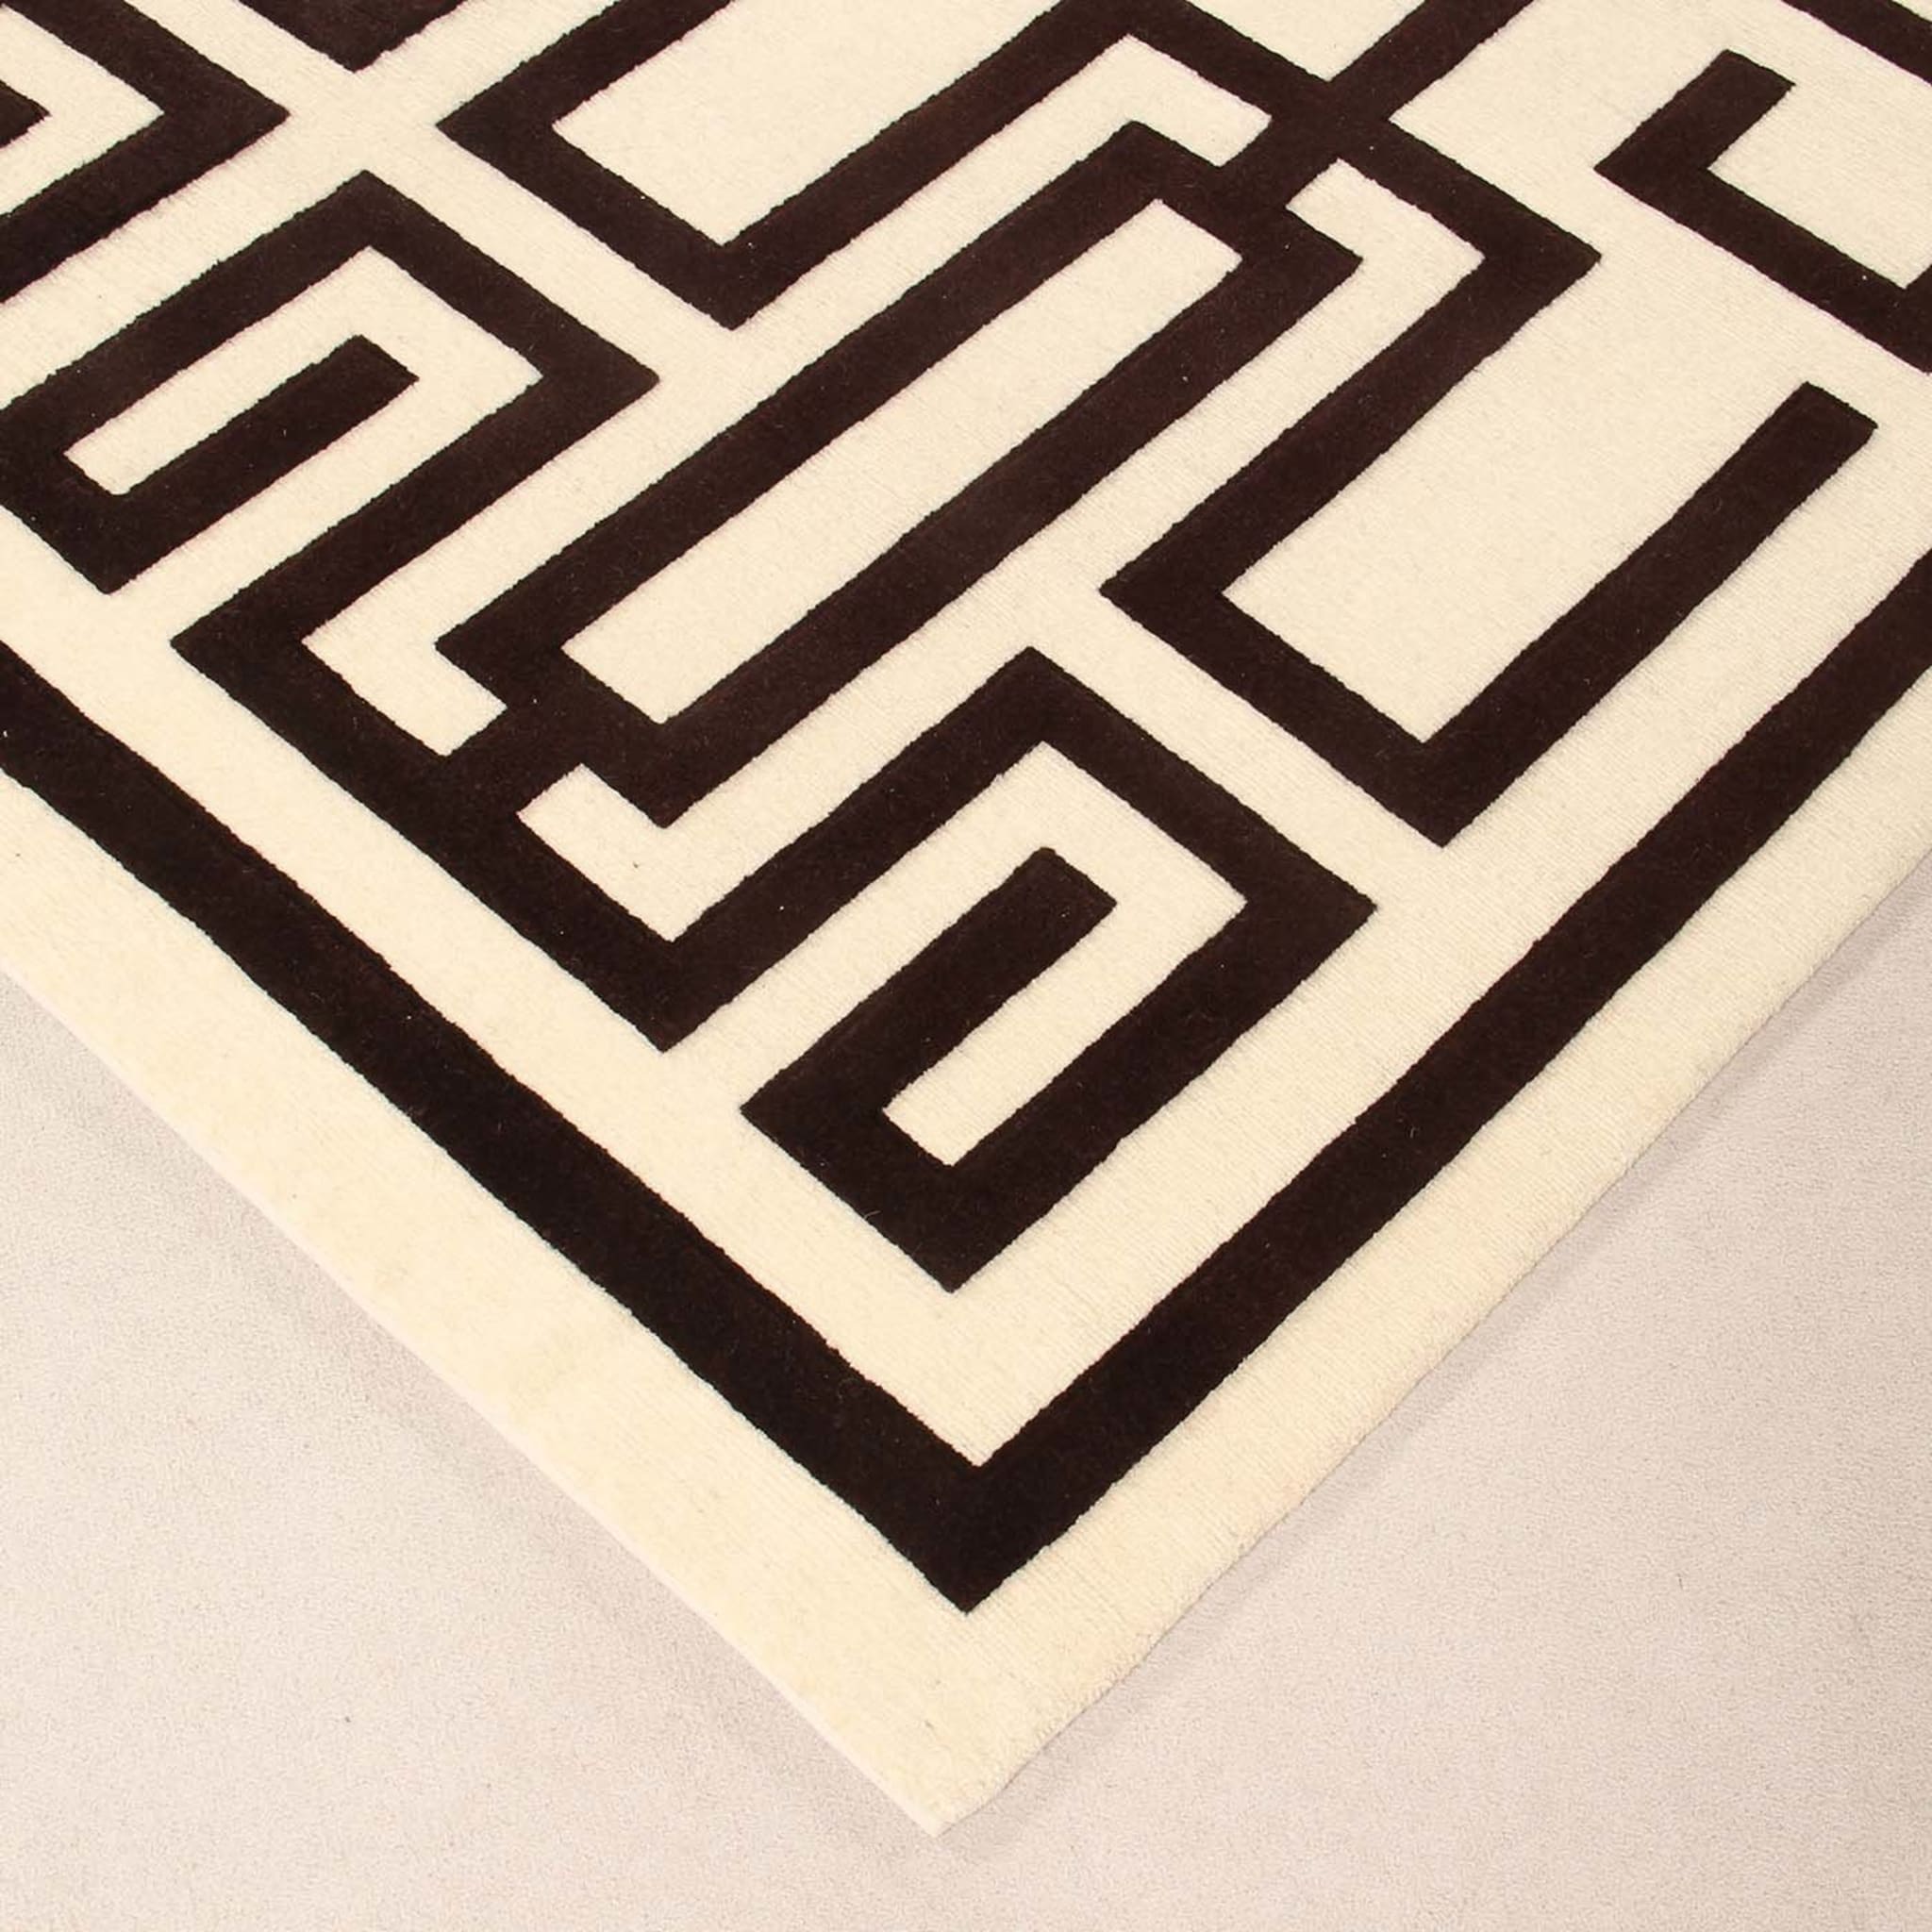 Labirinto Black Carpet by Gio Ponti - Alternative view 1